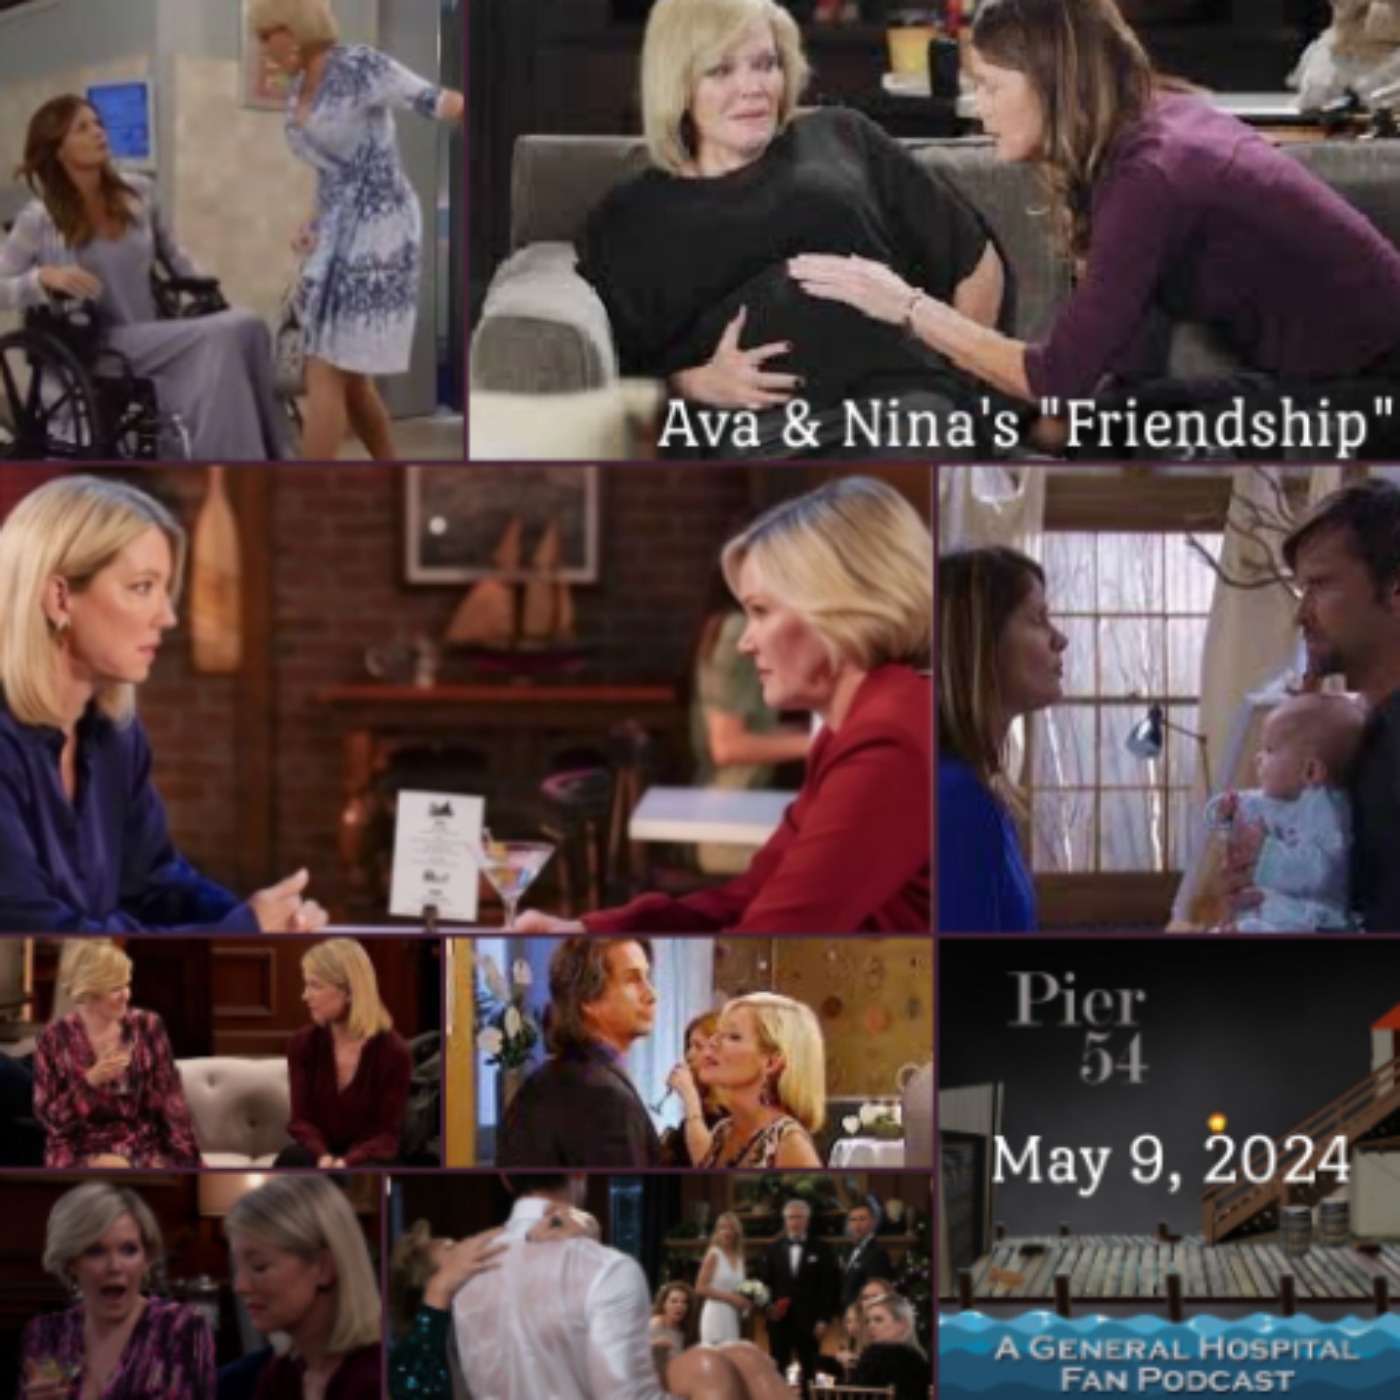 Episode 542: The Port Charles 411 - Ava & Nina's "Friendship"